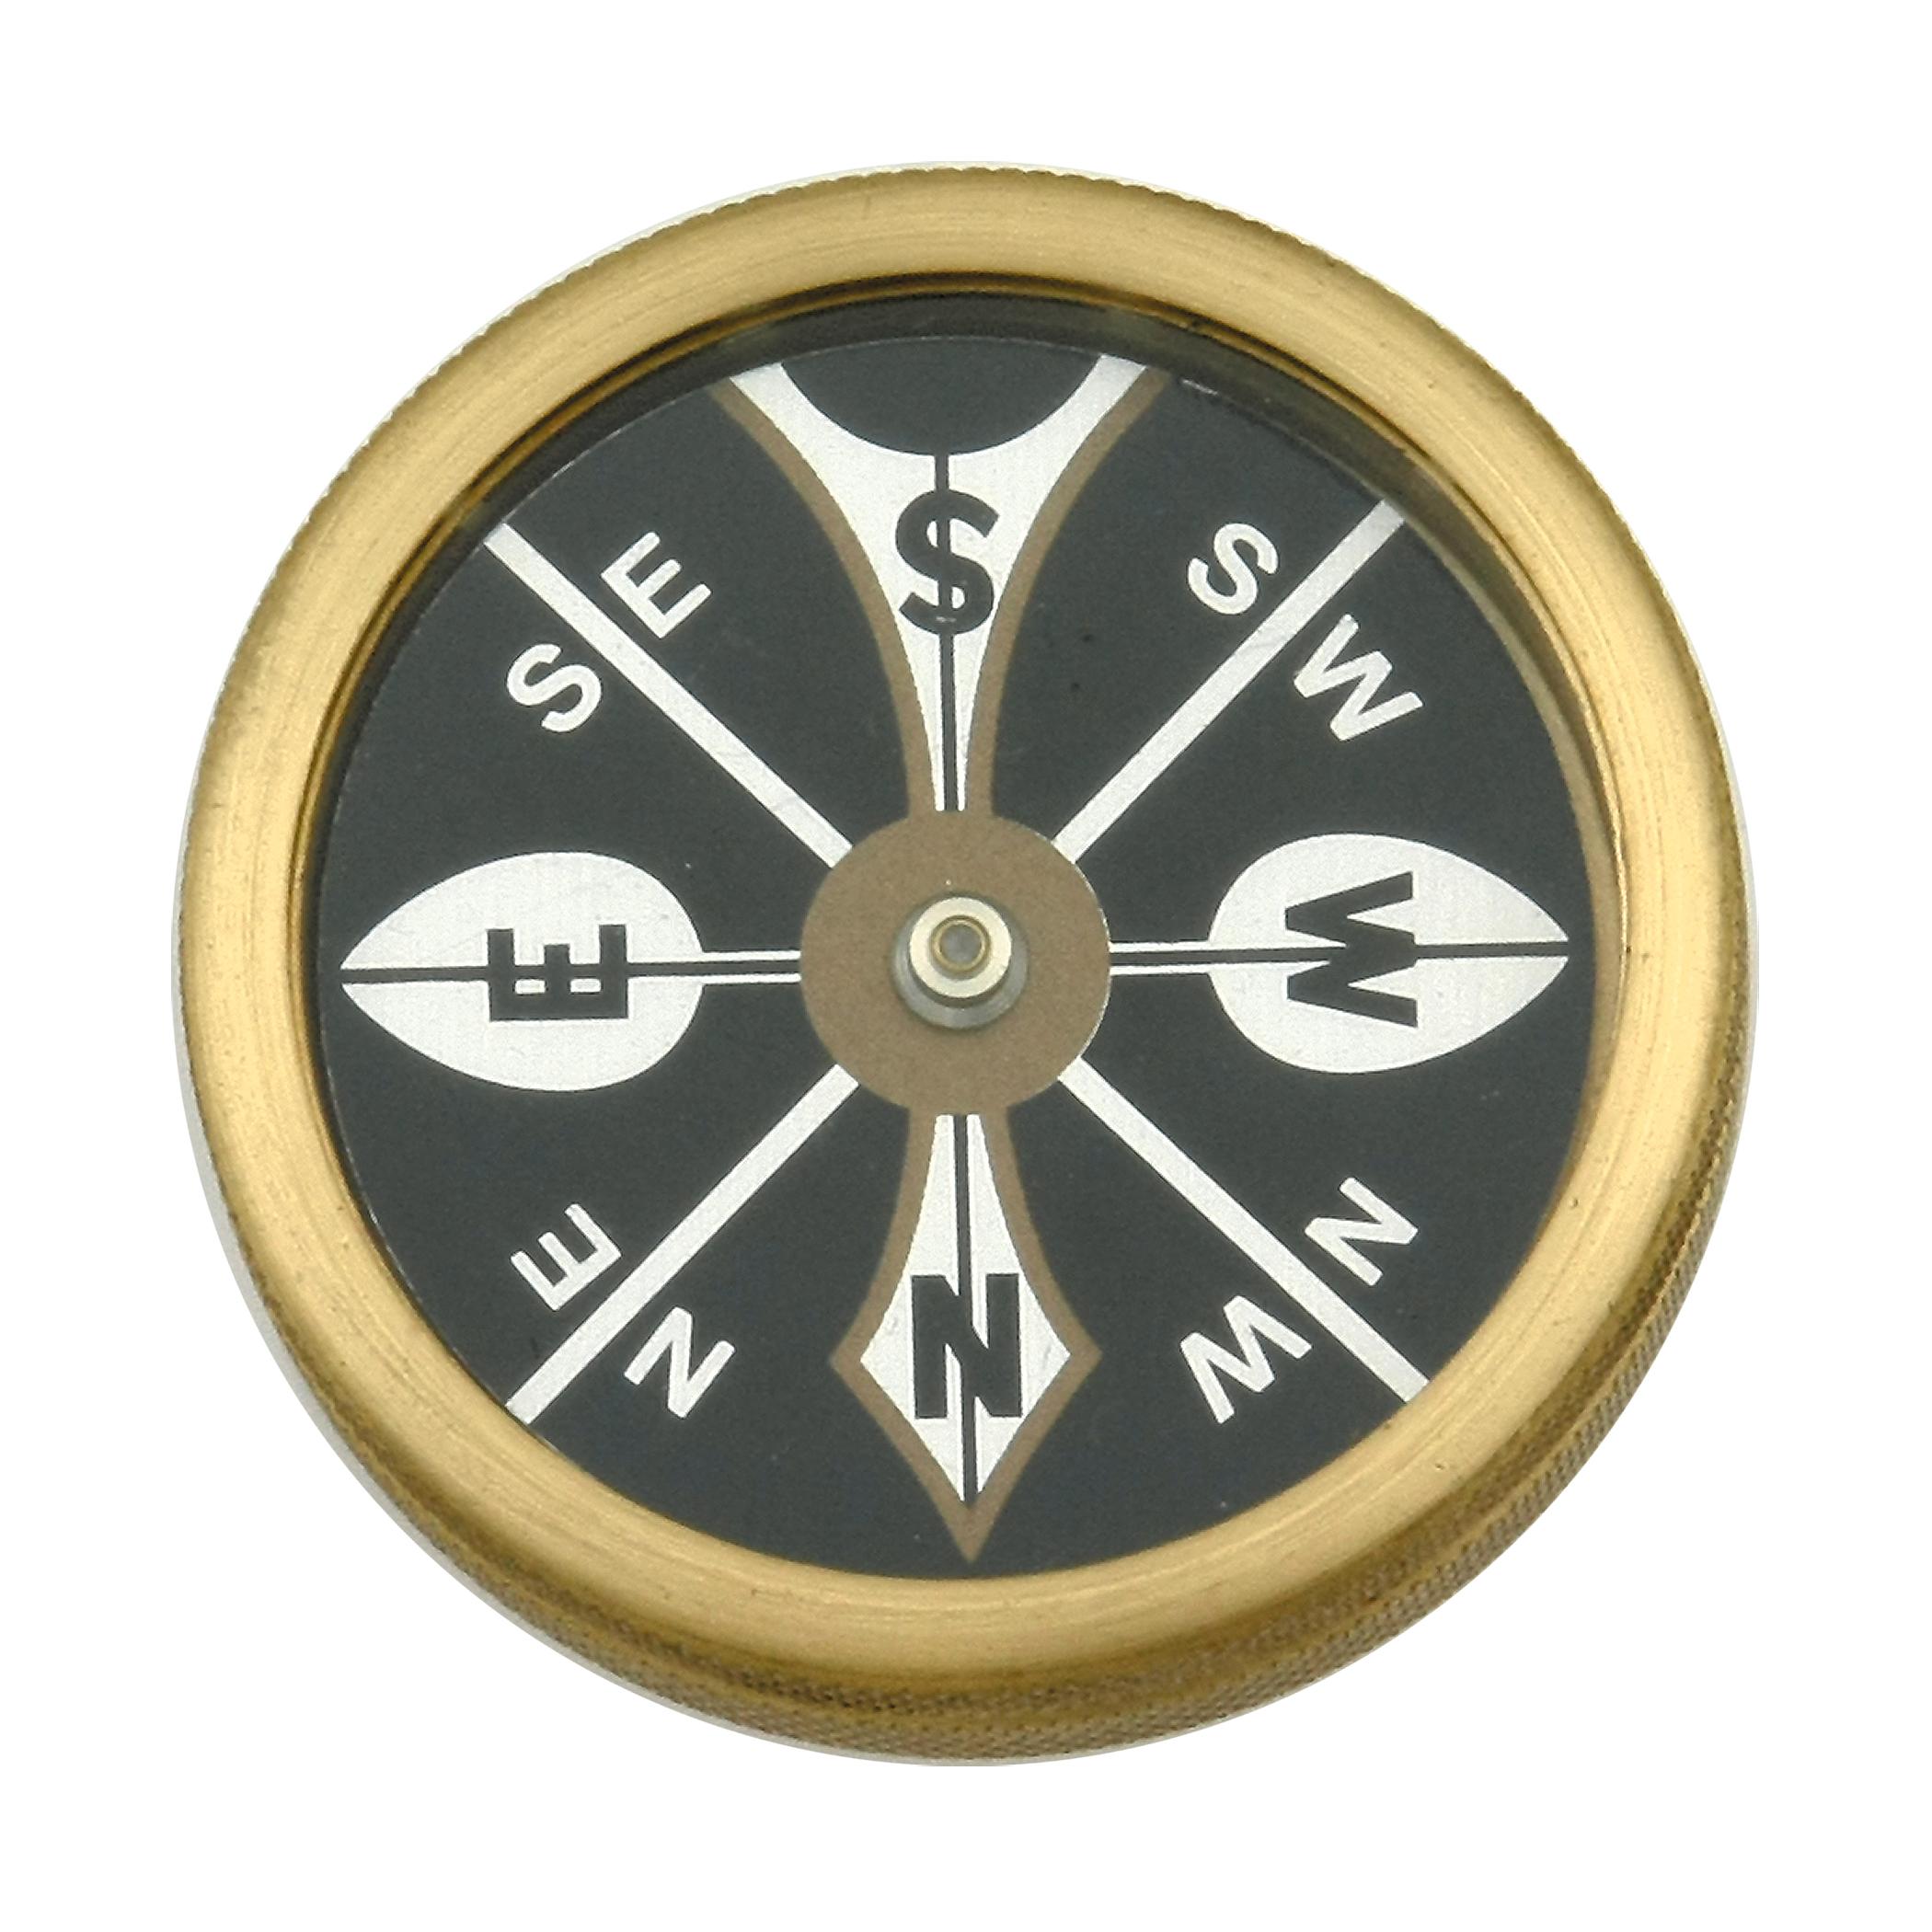 Outdoor Portable Brass Compass Waterproof Classic Pocket Compass